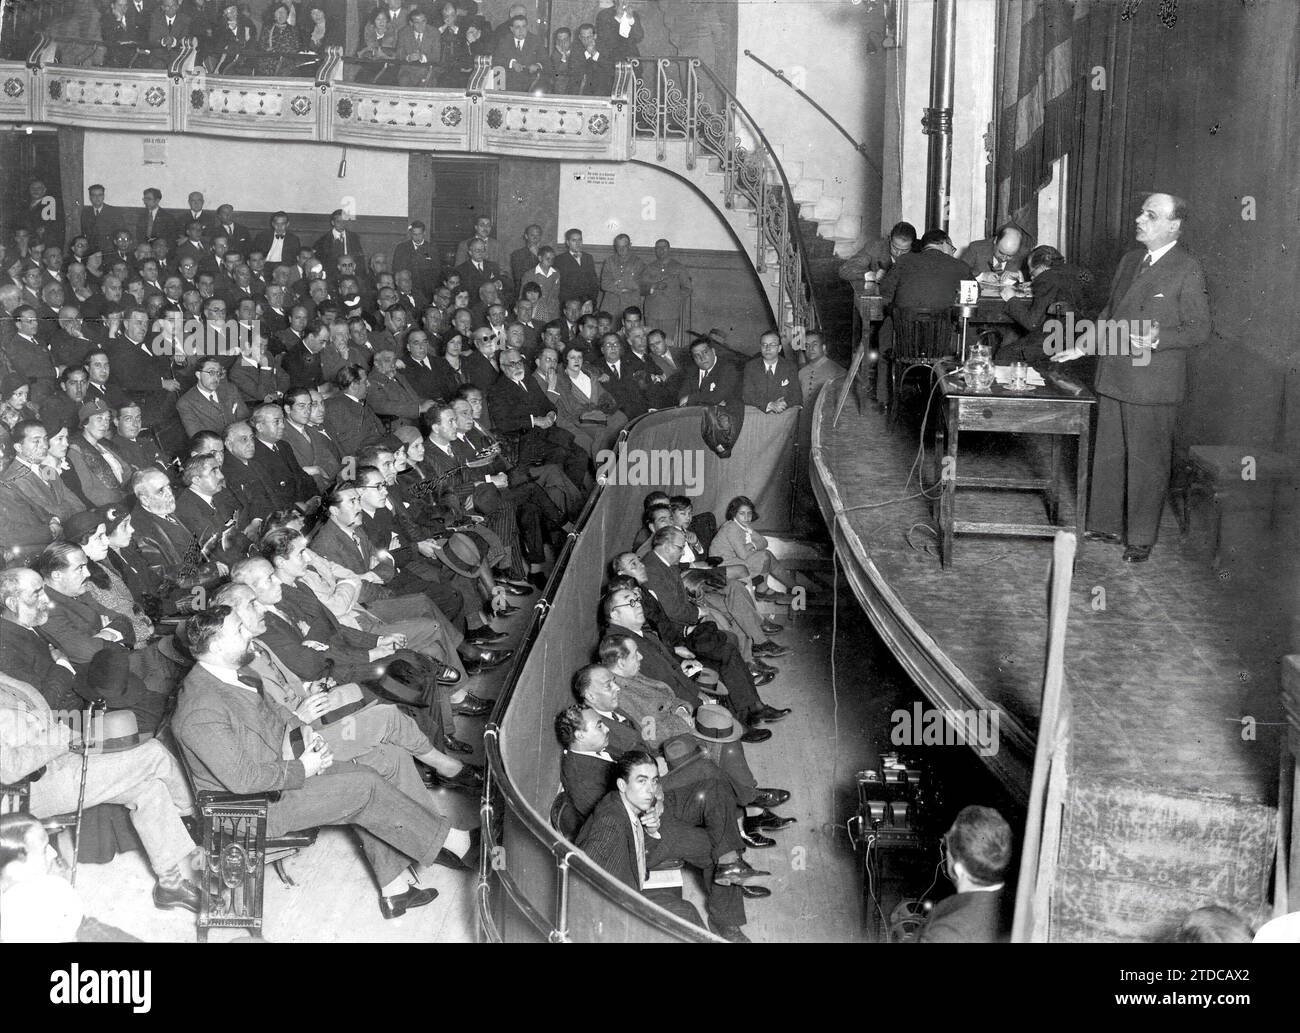 12/05/1931. The conference by Mr. José Ortega y Gasset. Credit: Album / Archivo ABC Stock Photo